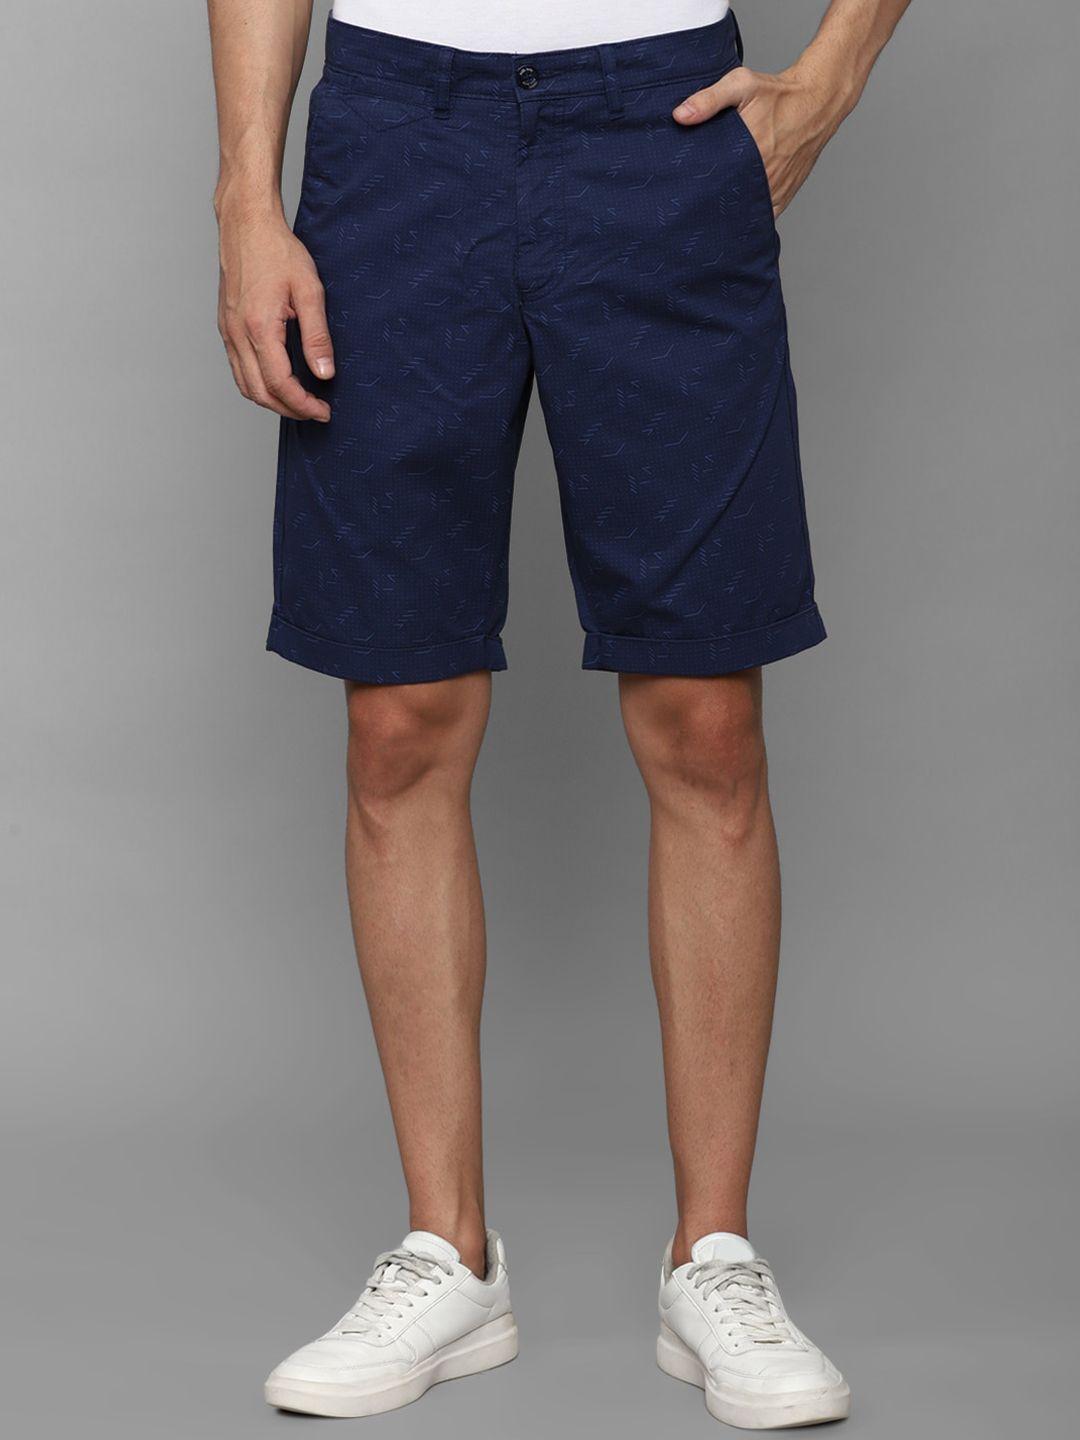 allen solly men geometric printed slim fit pure cotton shorts